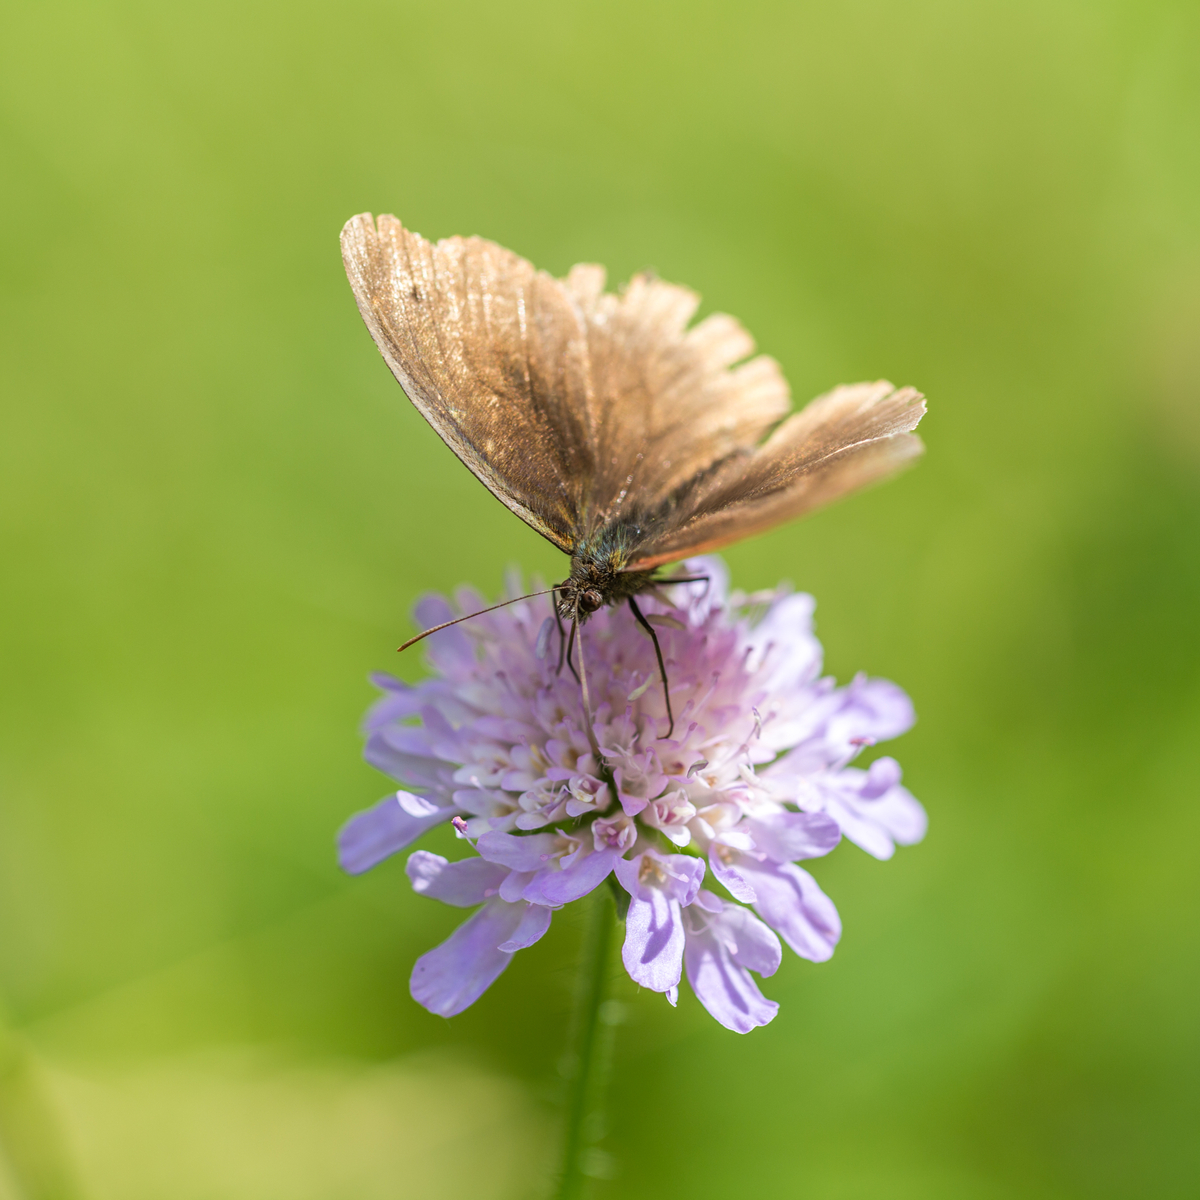 benhub_20180701_Butterfly on a flower